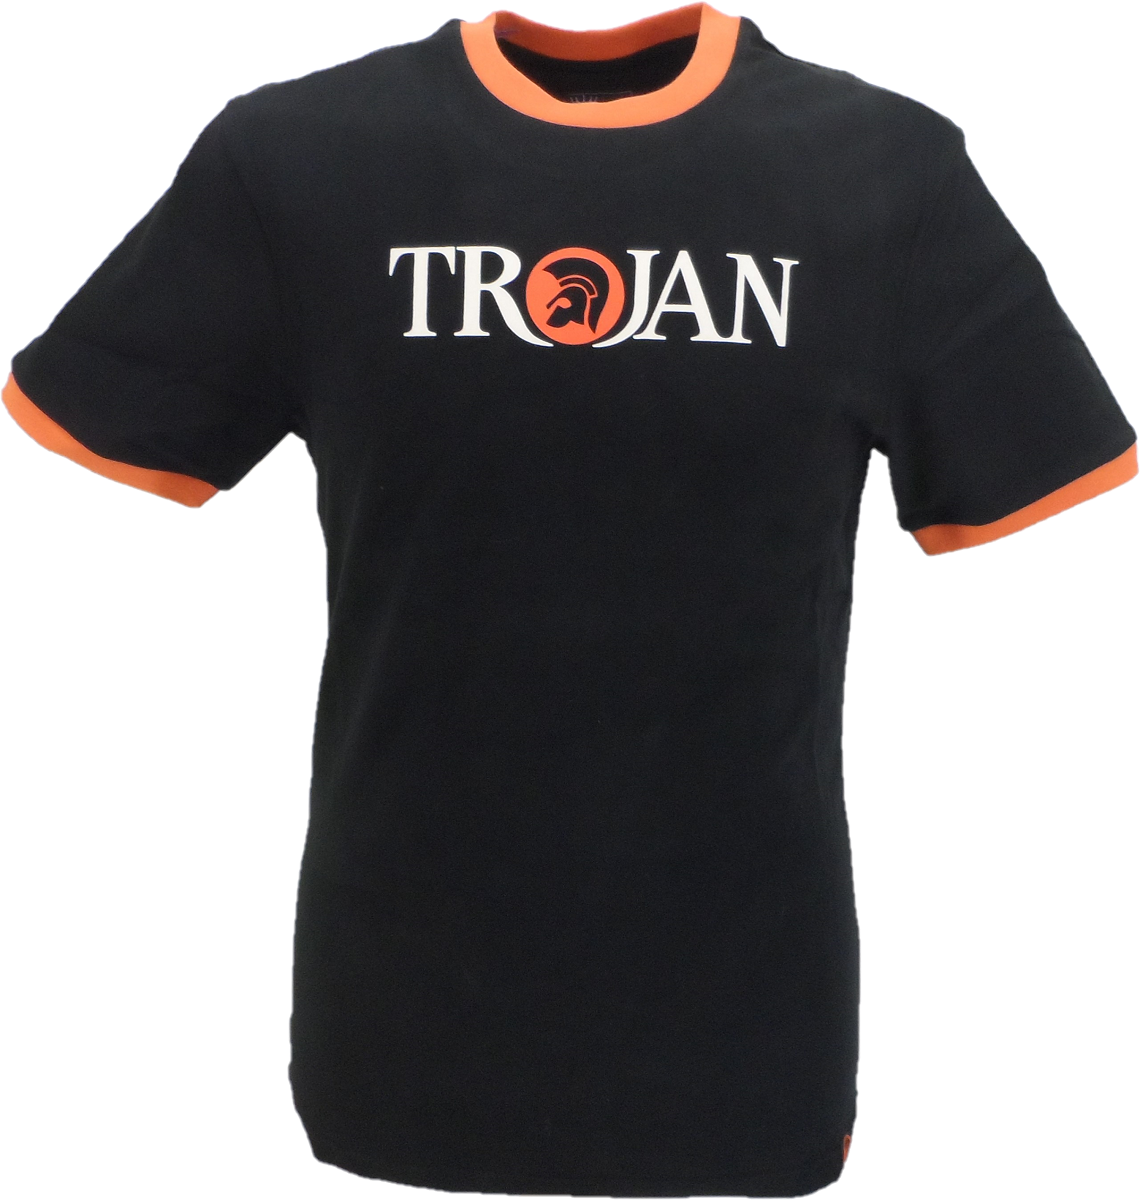 Trojan Records Black Classic Helmet Logo 100% Cotton T-Shirt